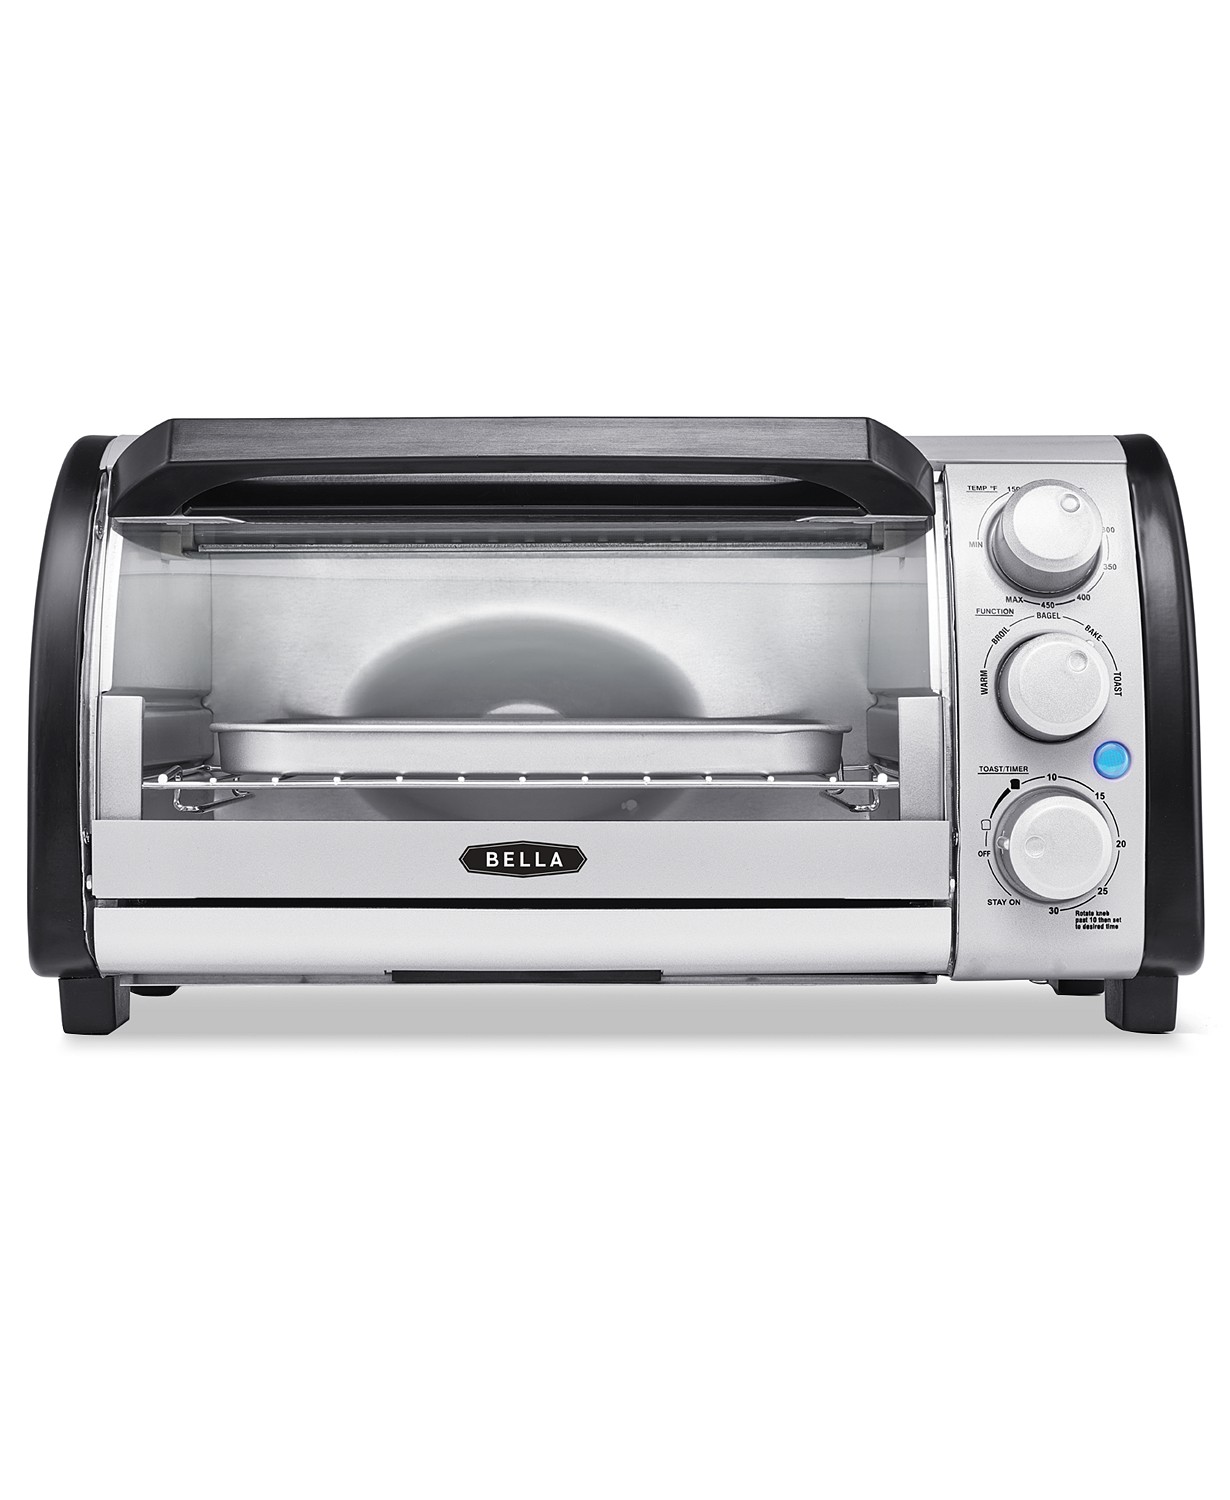 Macy S Bella Toaster Oven Mail In Rebate